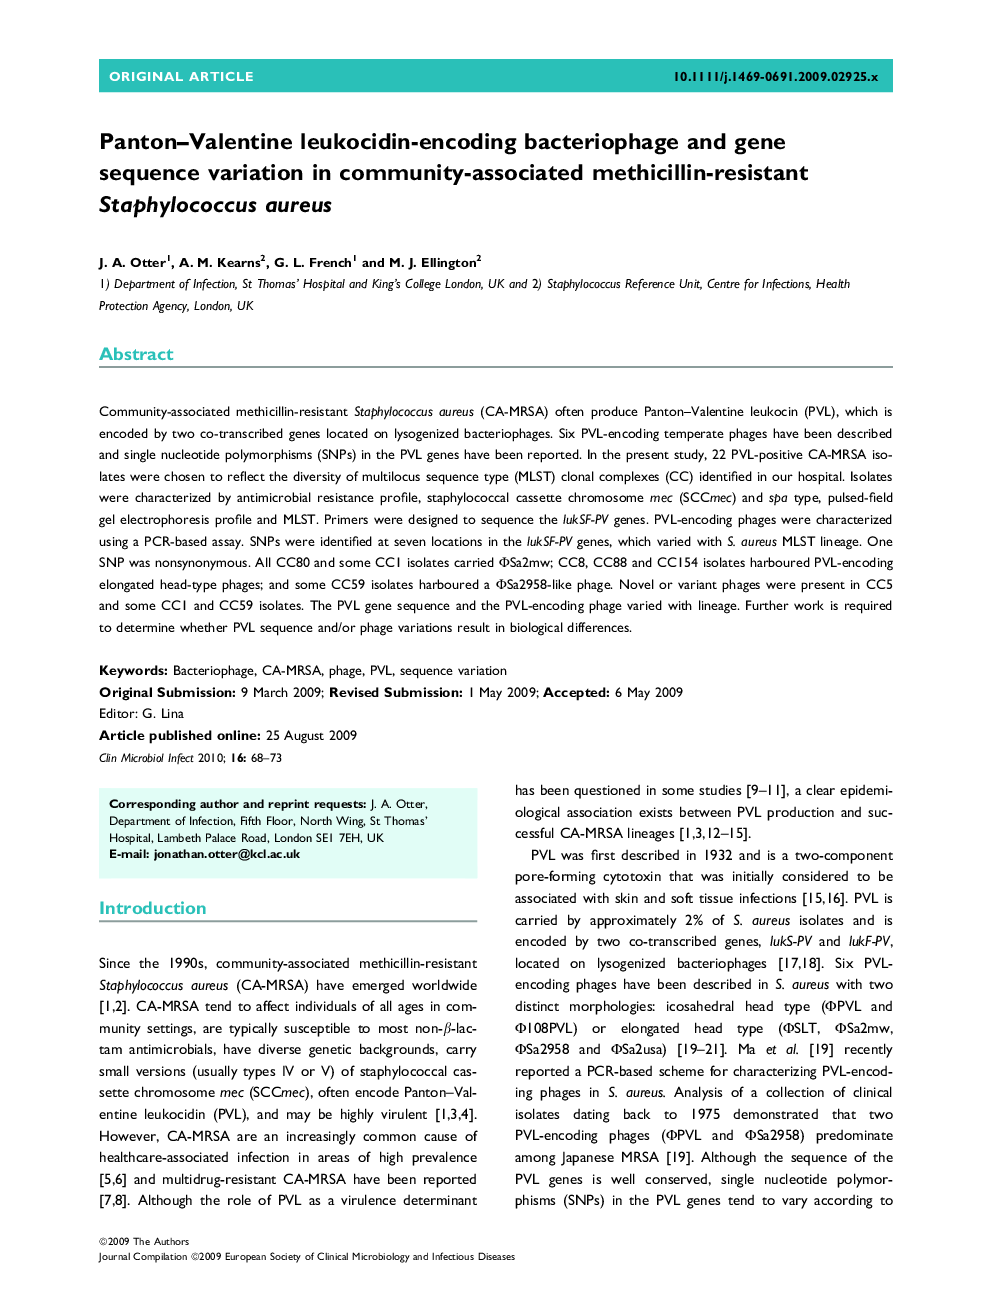 Panton–Valentine leukocidin-encoding bacteriophage and gene sequence variation in community-associated methicillin-resistant Staphylococcus aureus 